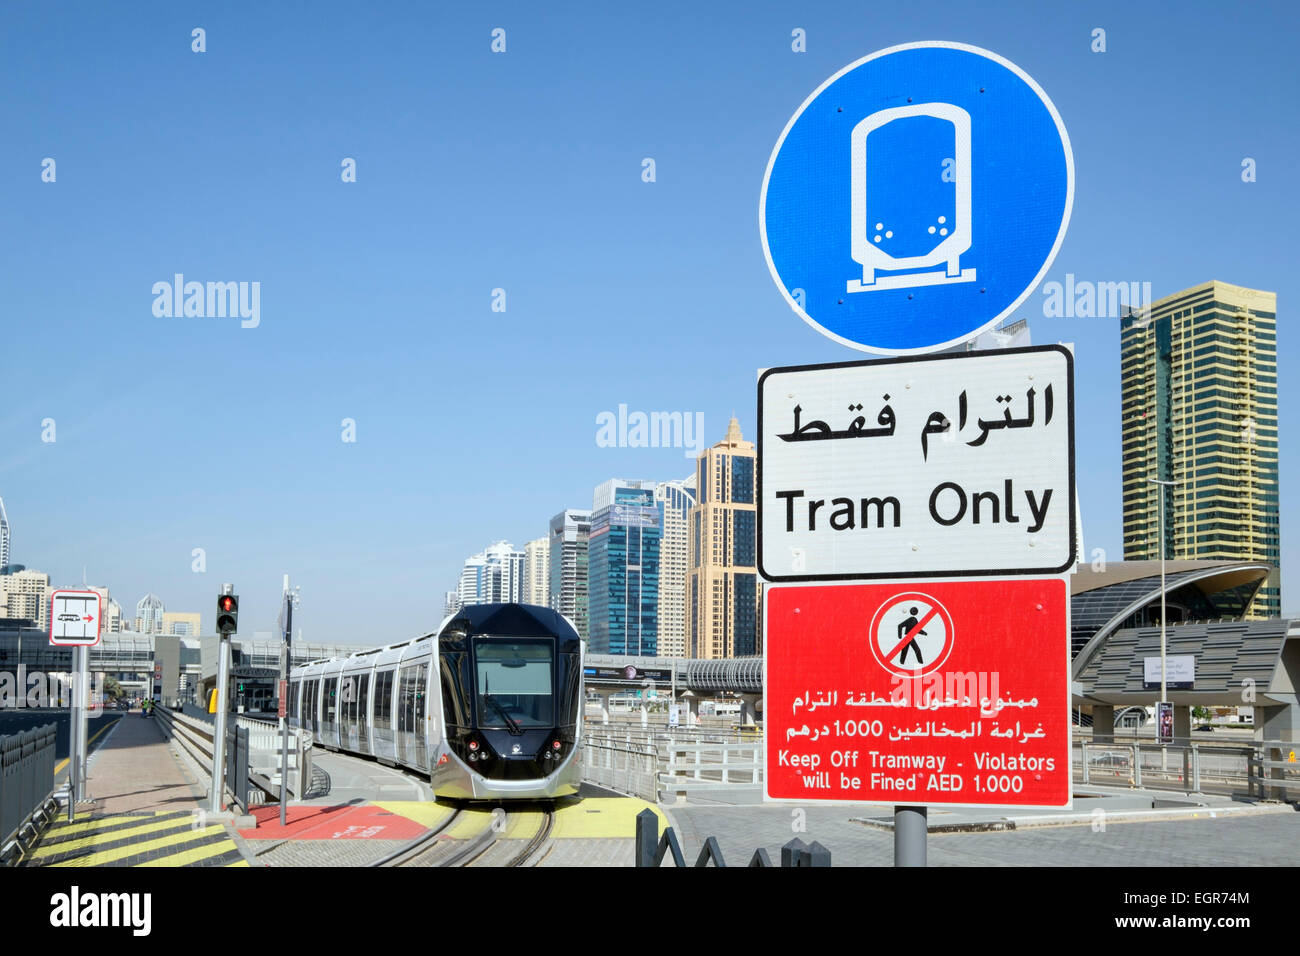 New Dubai tram in Marina district of New Dubai in United Arab Emirates Stock Photo